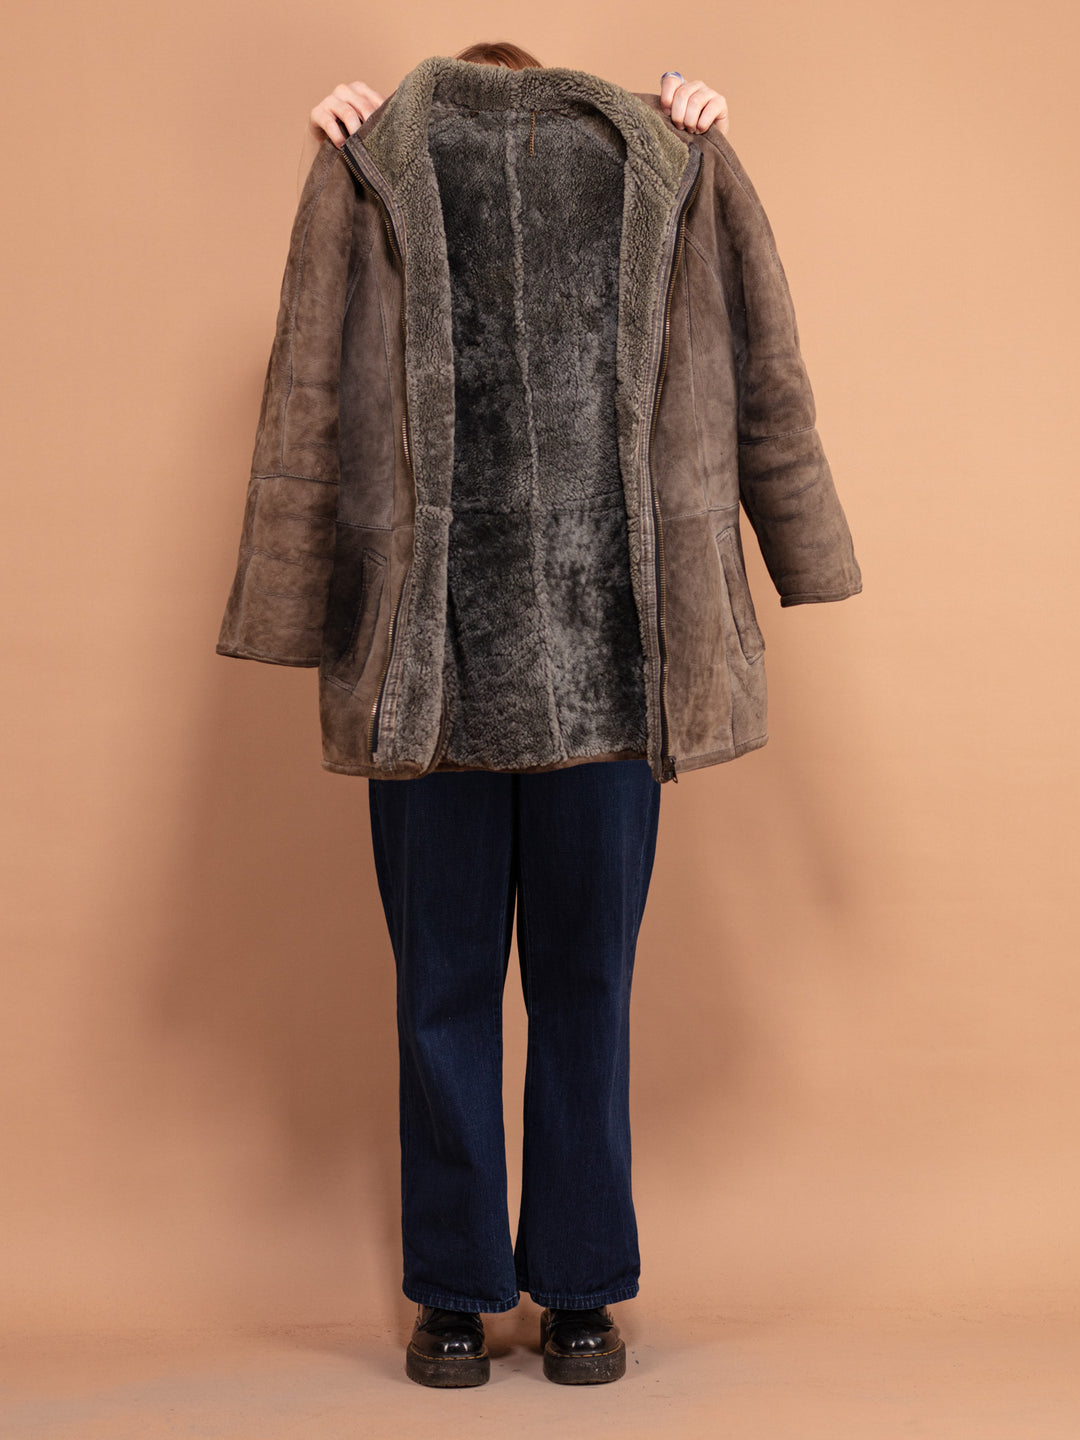 Thick Shearling Coat 80's, Size L Large, Vintage Women Brown Coat, Zip Up Sheepskin Coat, Cozy Winter Coat, Oversized Sheepskin Jacket